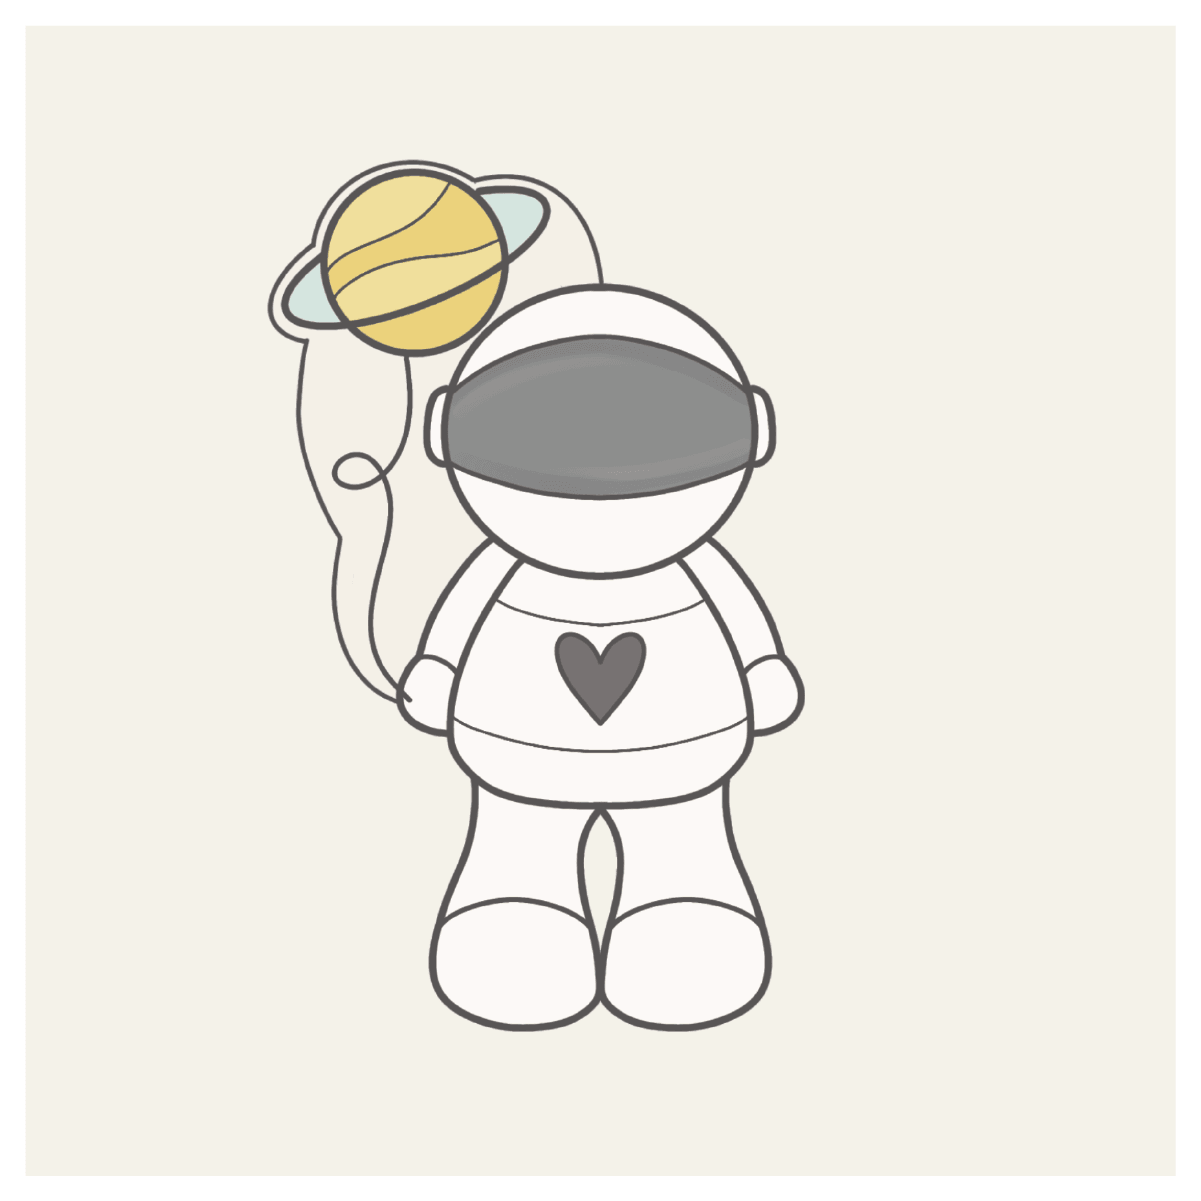 Balloon Astronaut Cookie Cutter